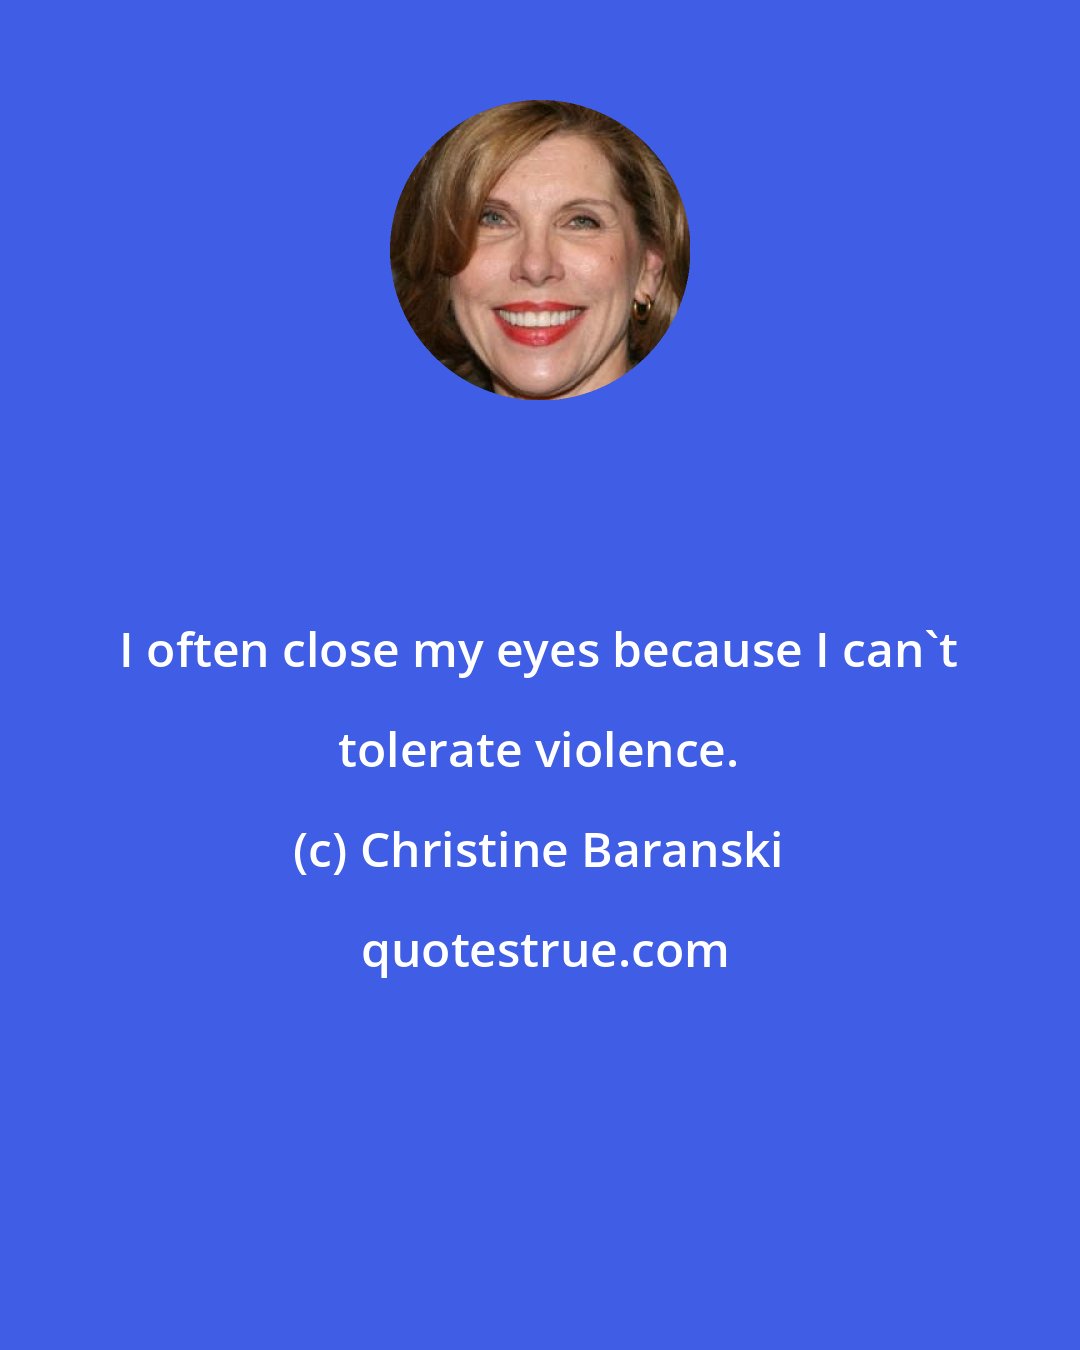 Christine Baranski: I often close my eyes because I can't tolerate violence.